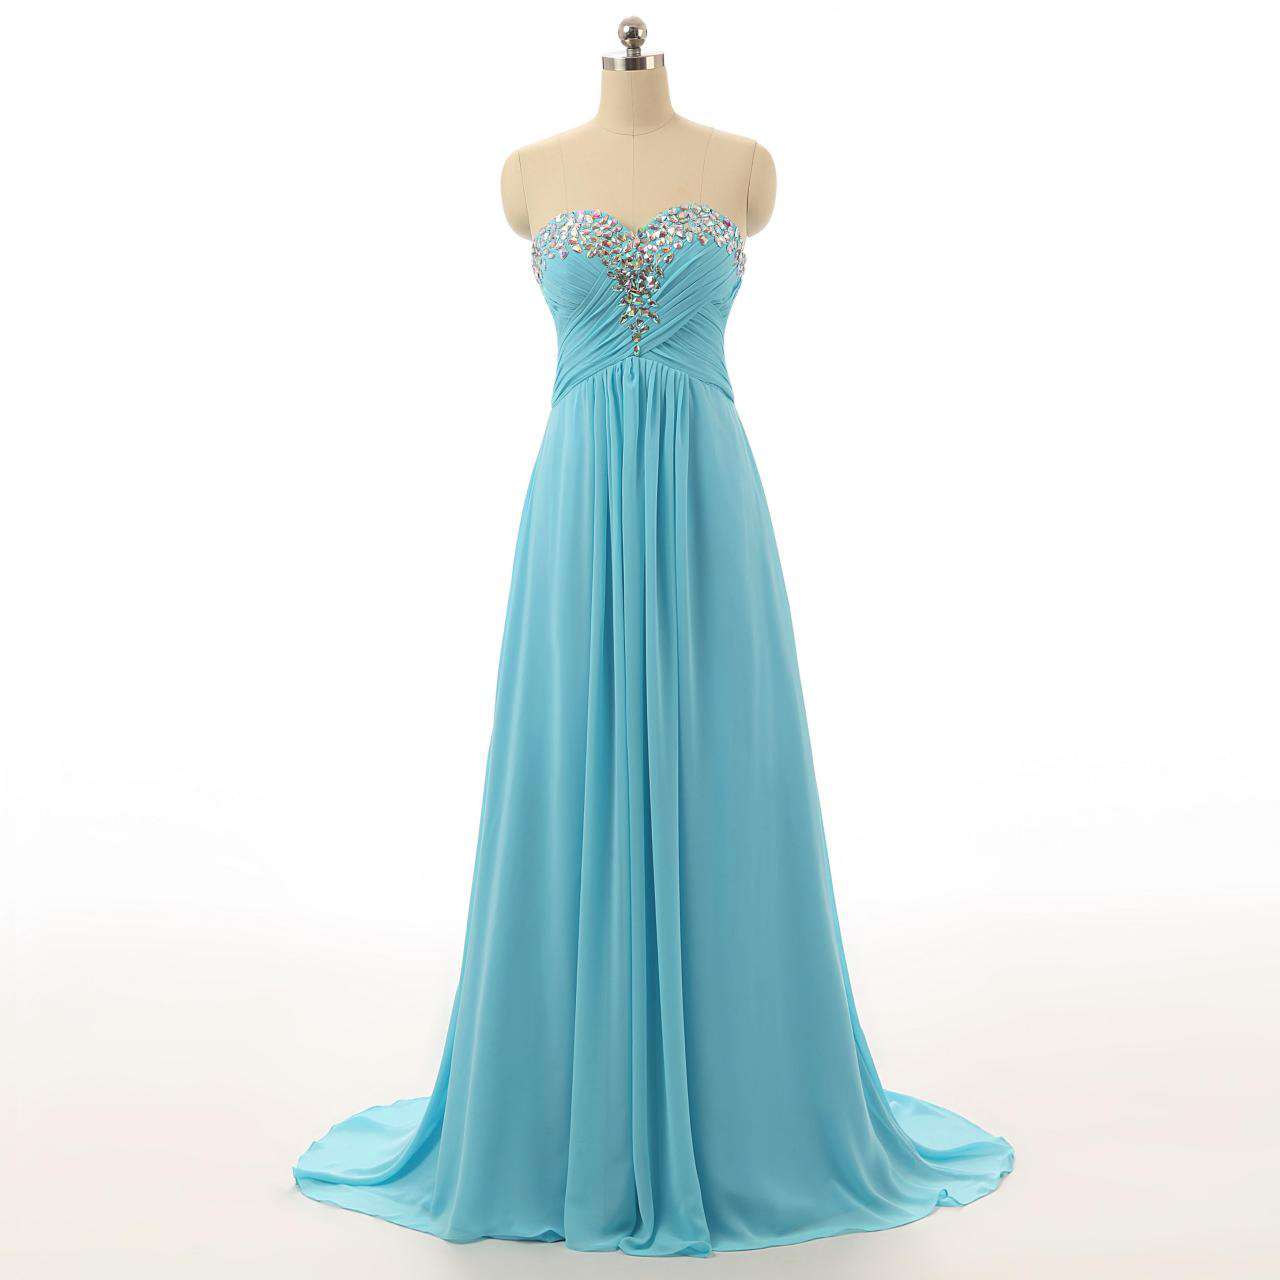 Long Light Blue Chiffon Prom Dress, Evening Dress With Beaded Rhinestone Embellishment And Lace-up Back